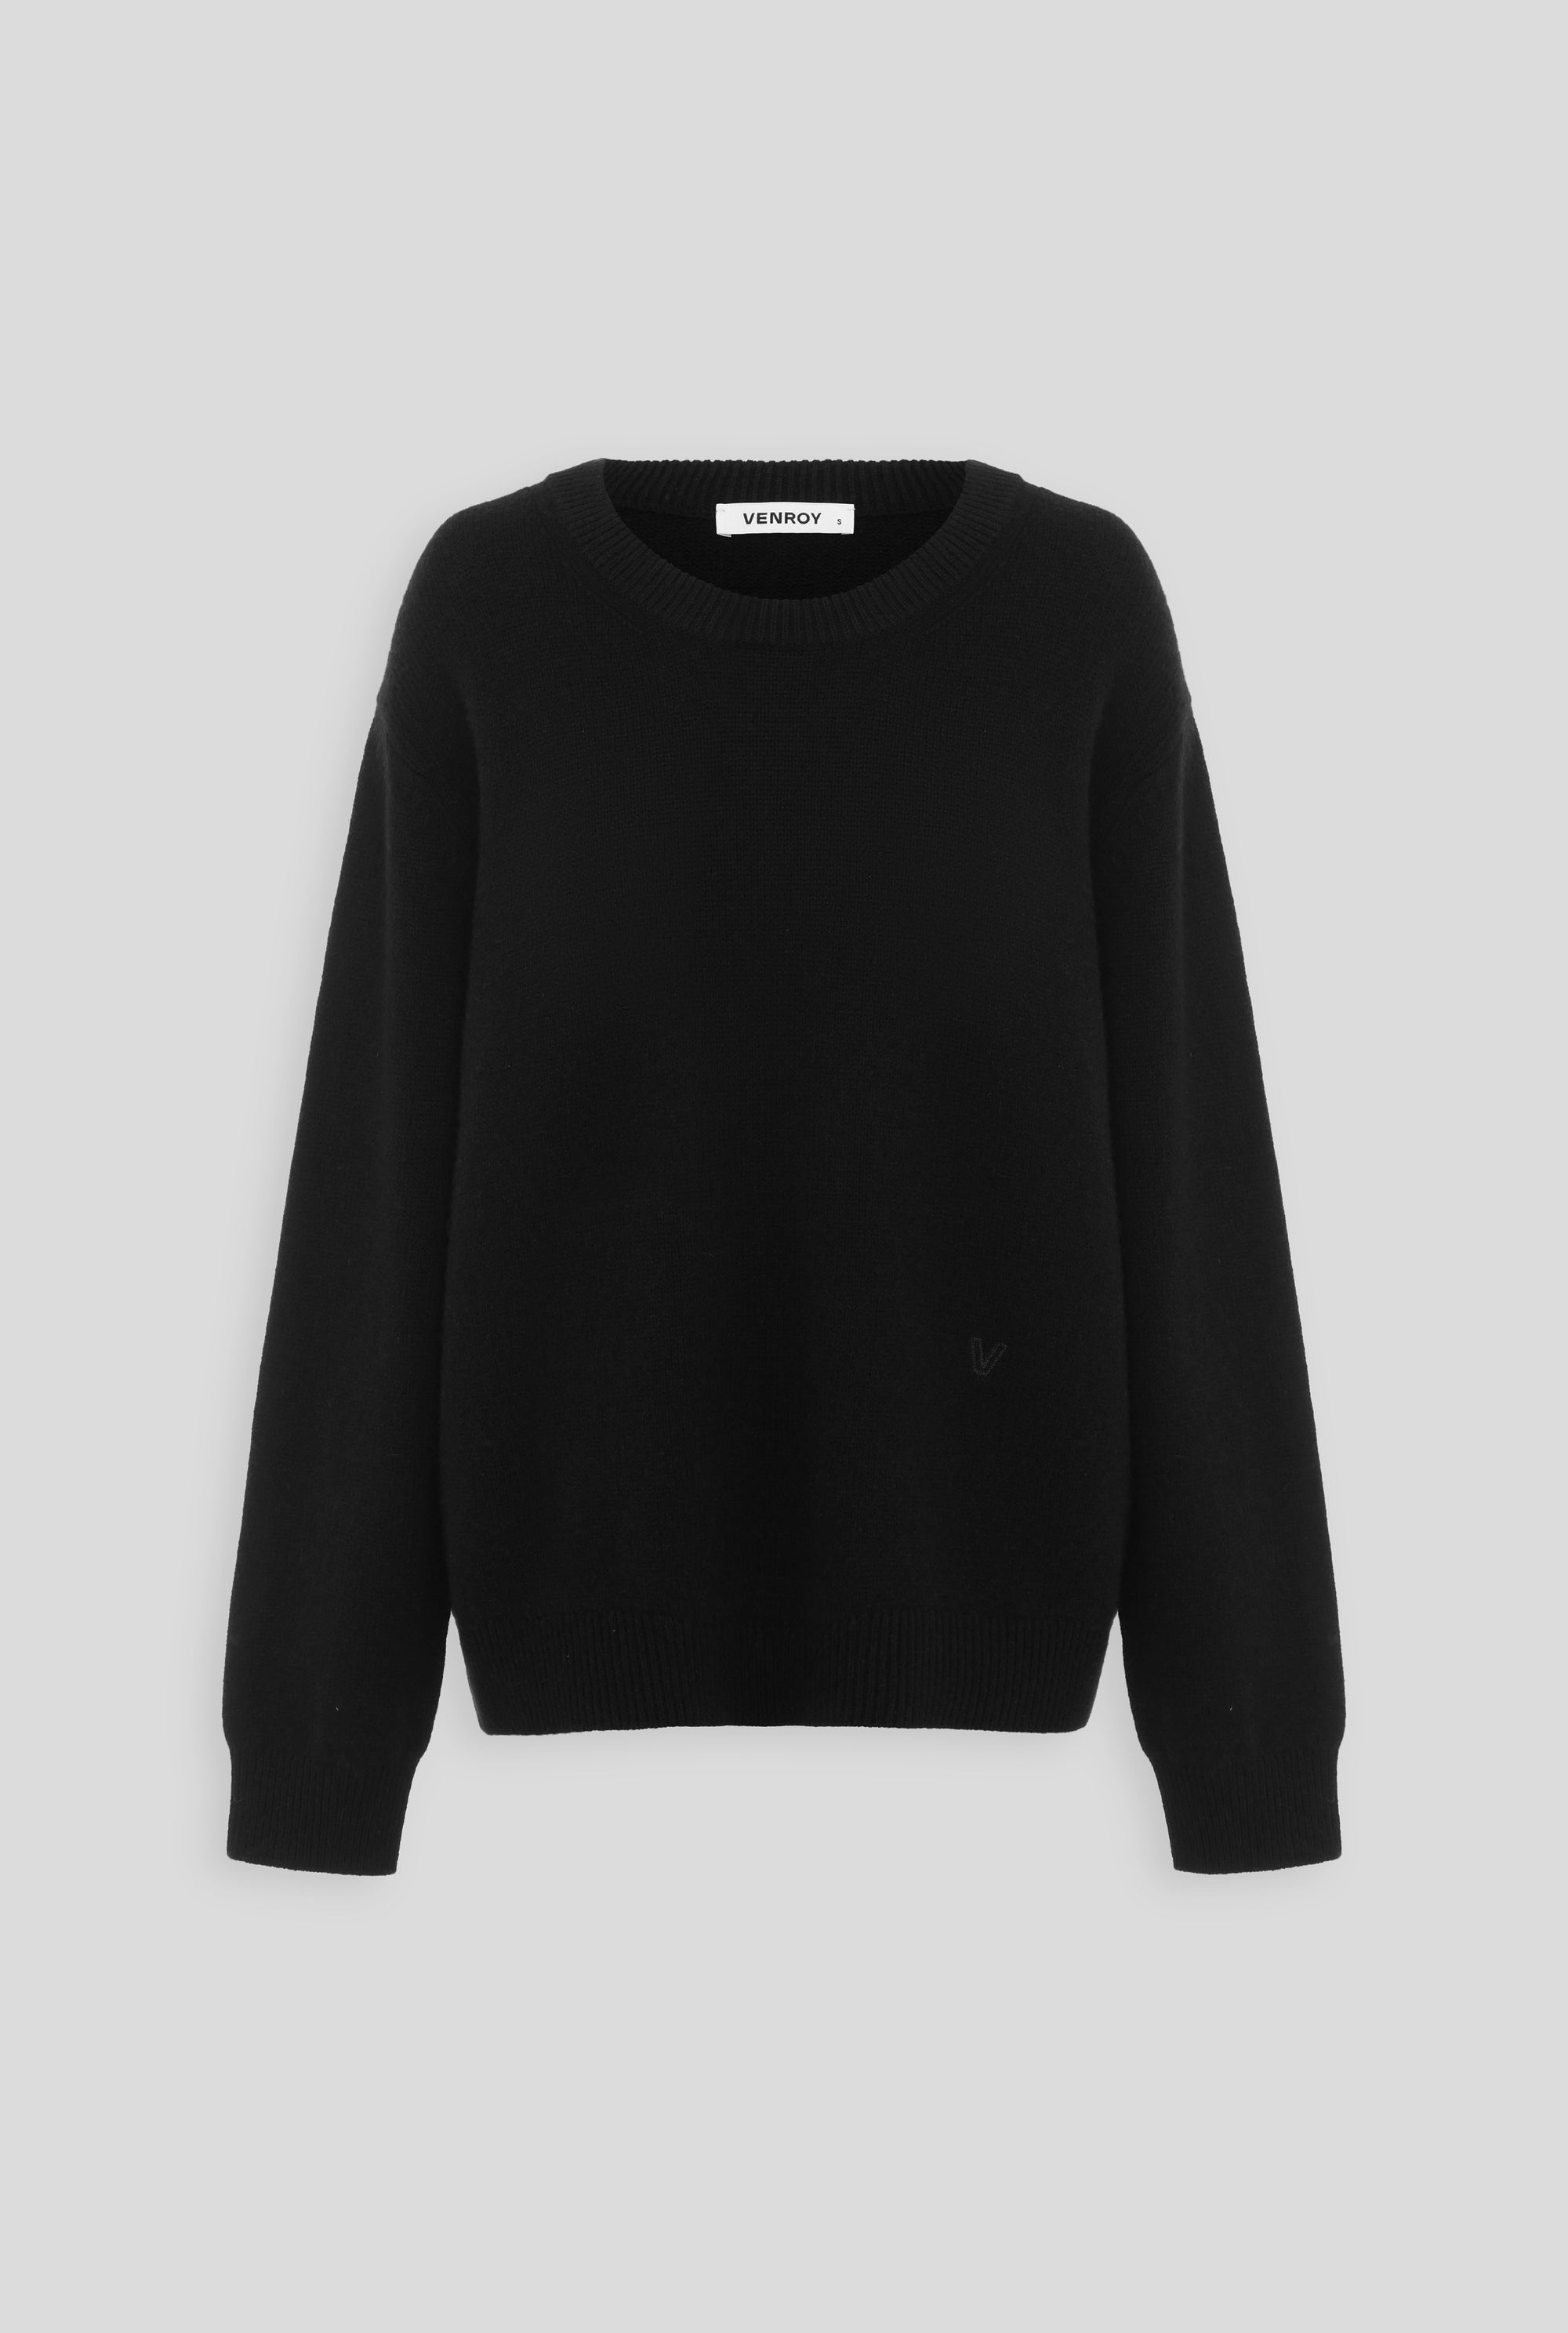 Venroy - Womens Oversized Wool Cashmere Sweater | Venroy | Premium ...